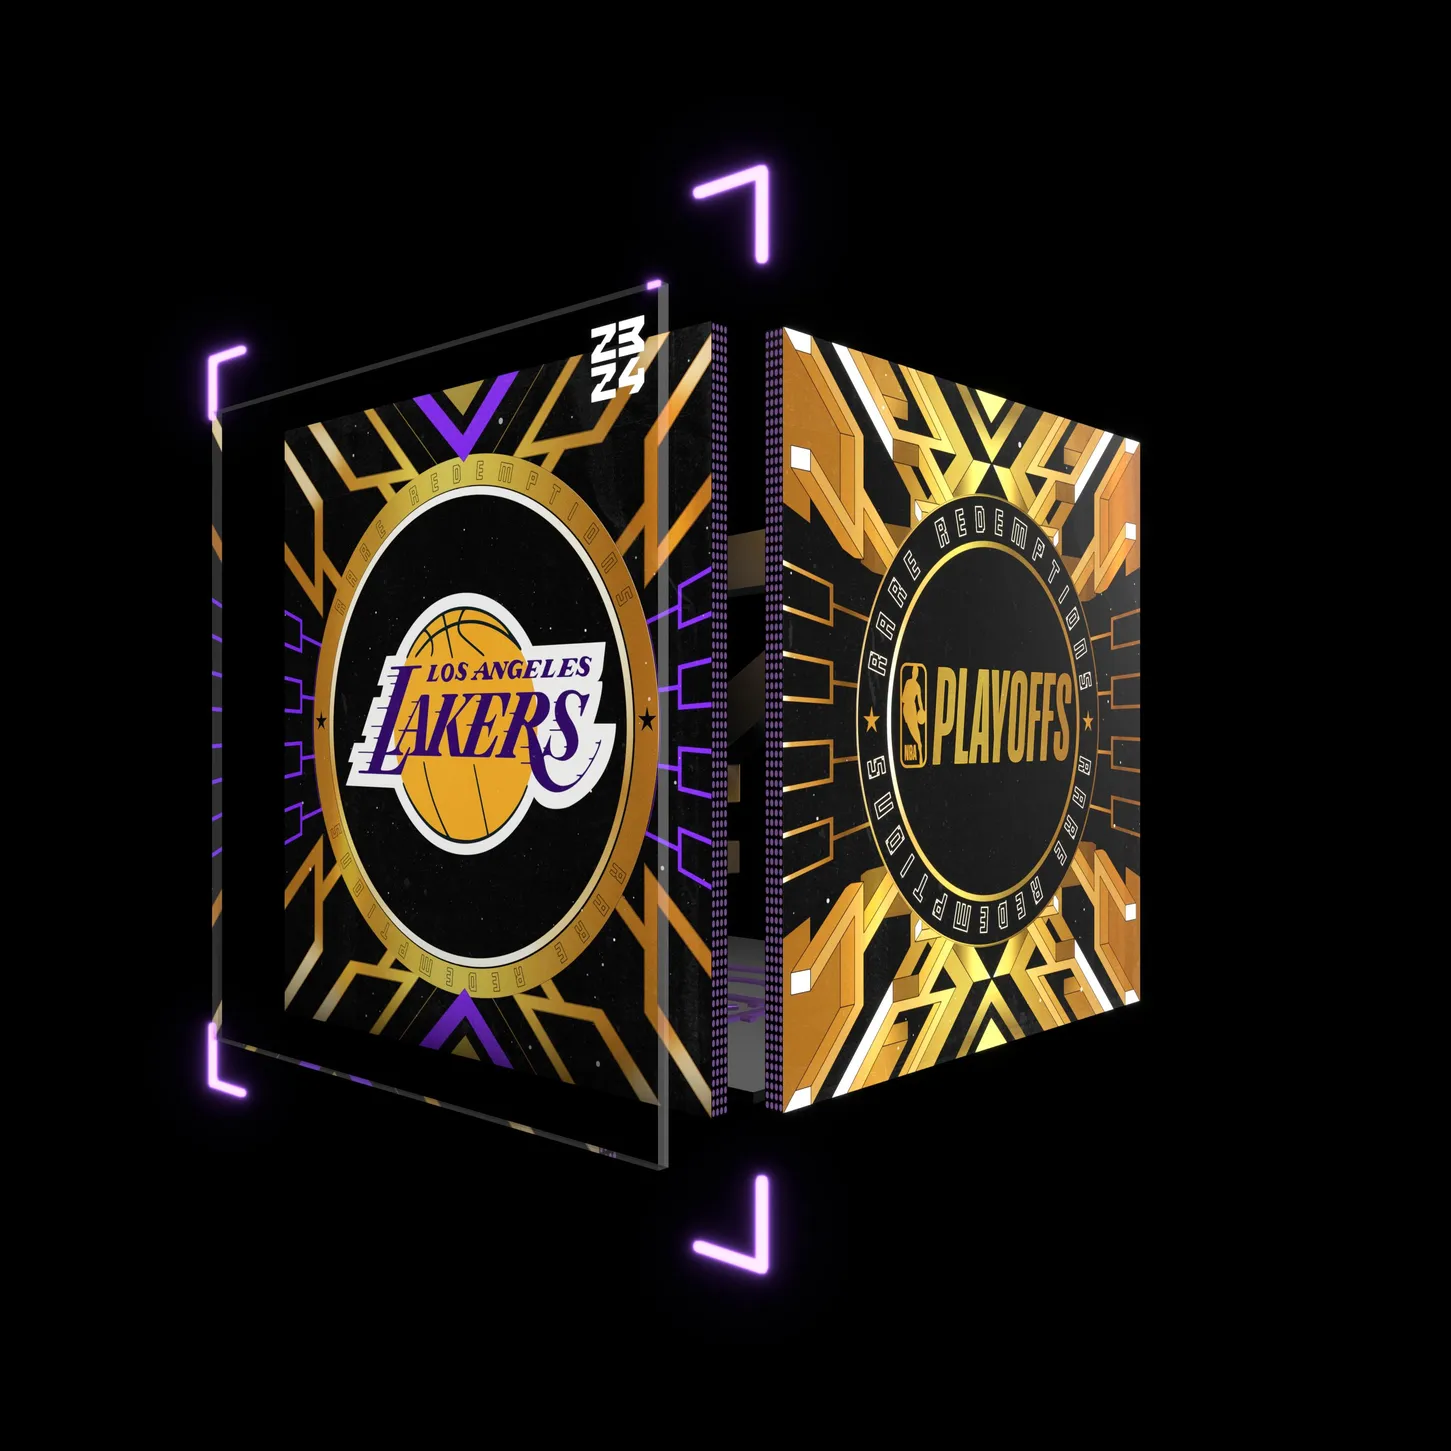 Los Angeles Lakers - Redemption asset